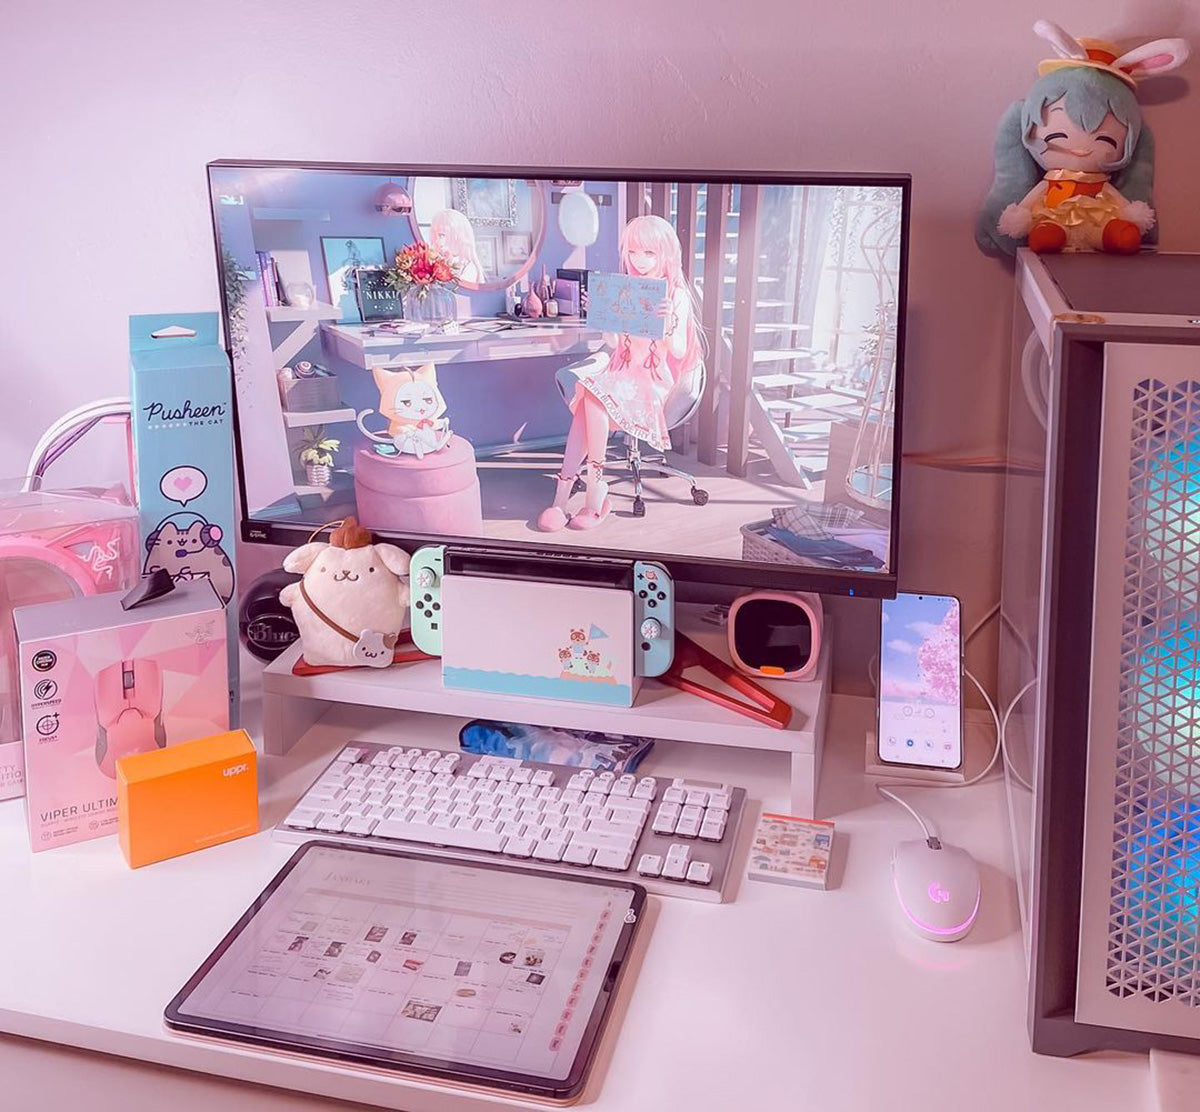 30 Cutest Desk Setups For A Fun Workspace